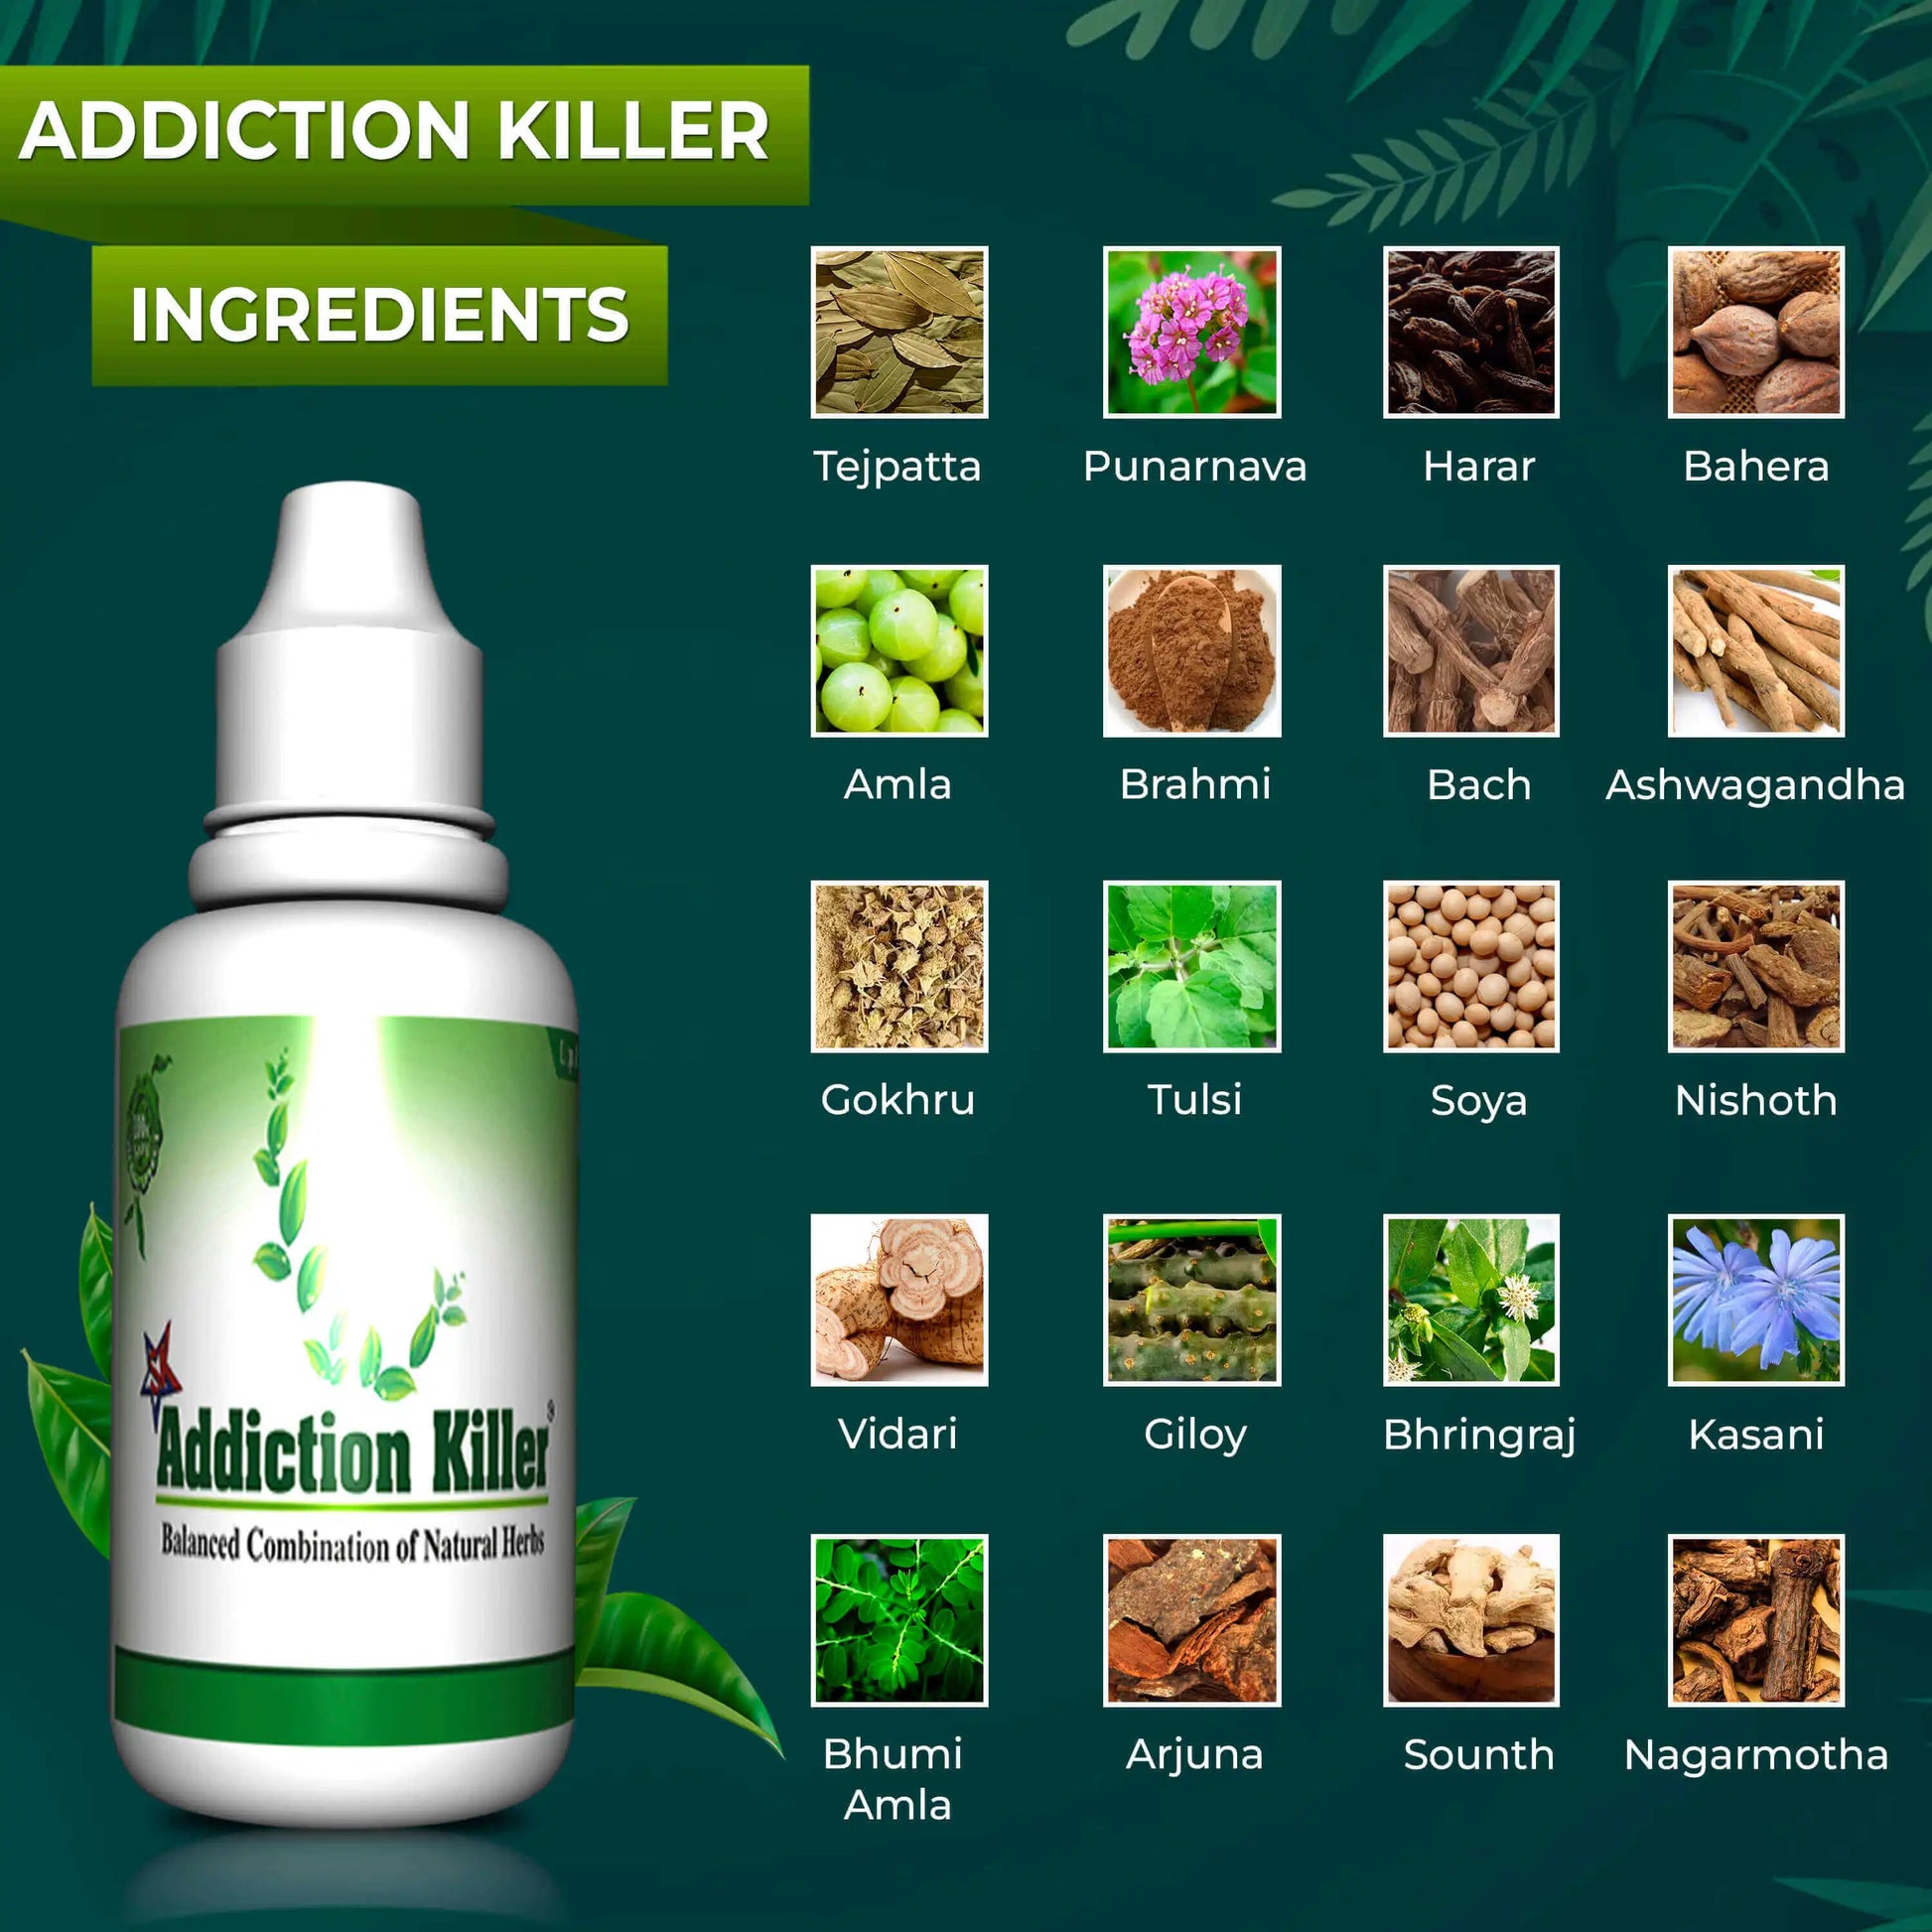 Addiction Killer ingredients